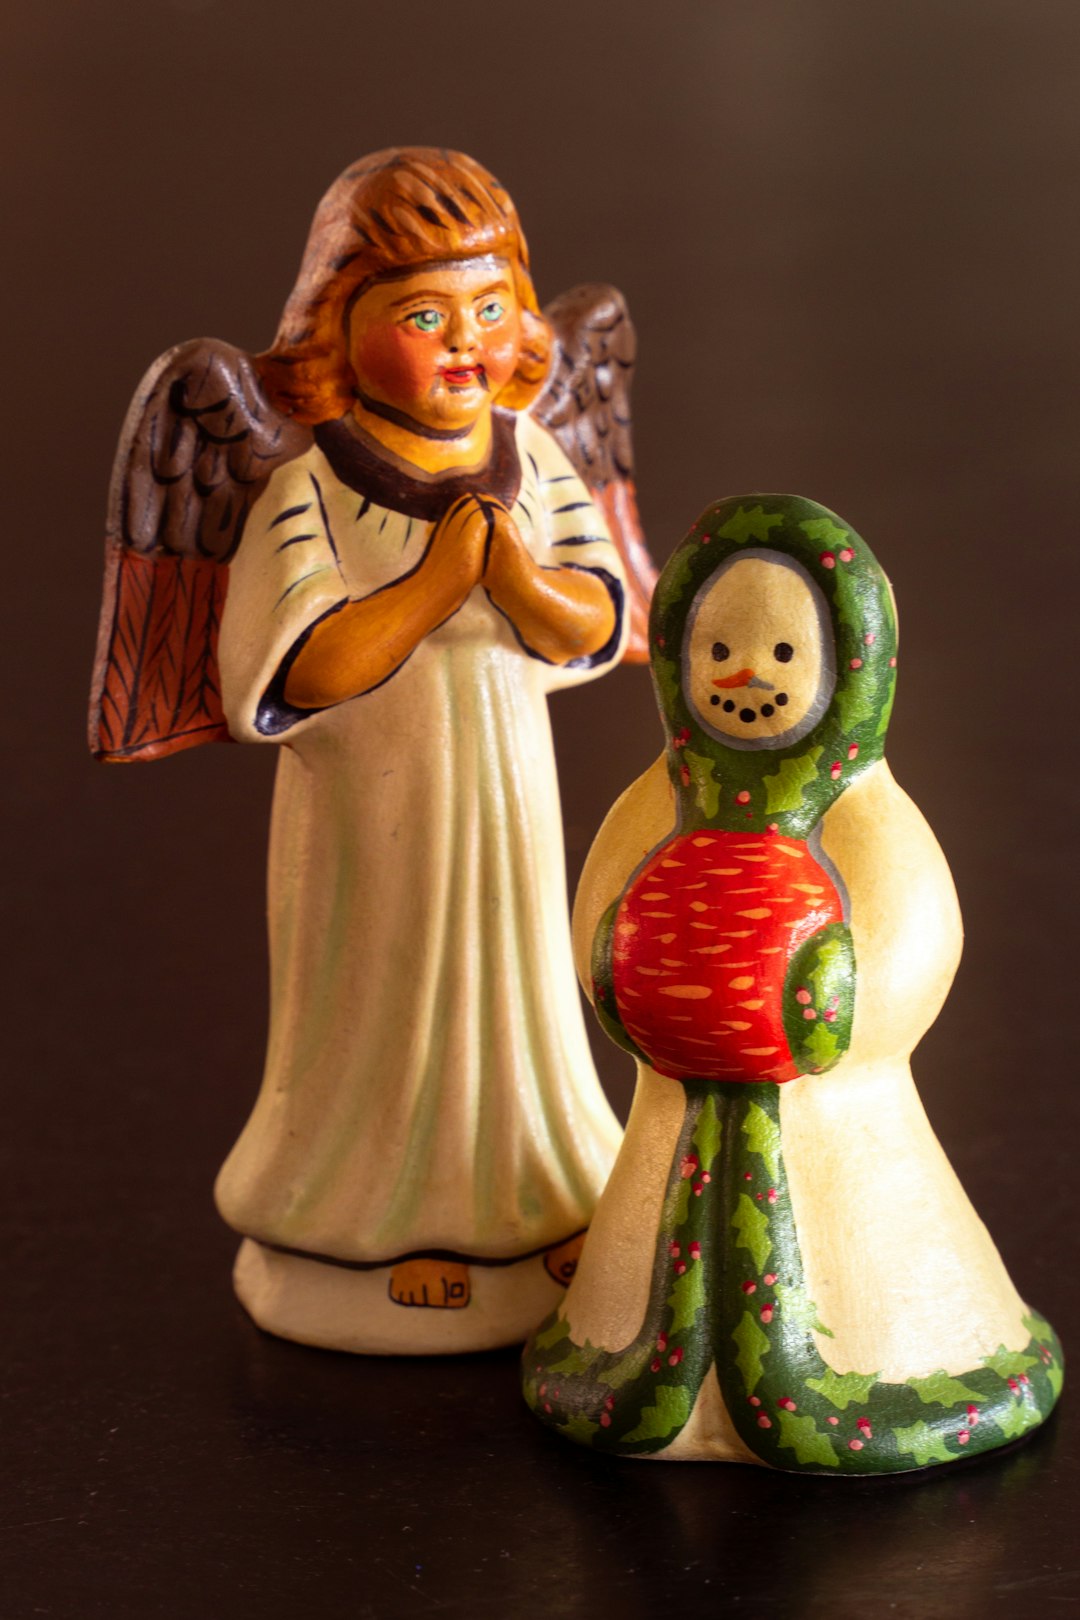 woman in white dress ceramic figurine